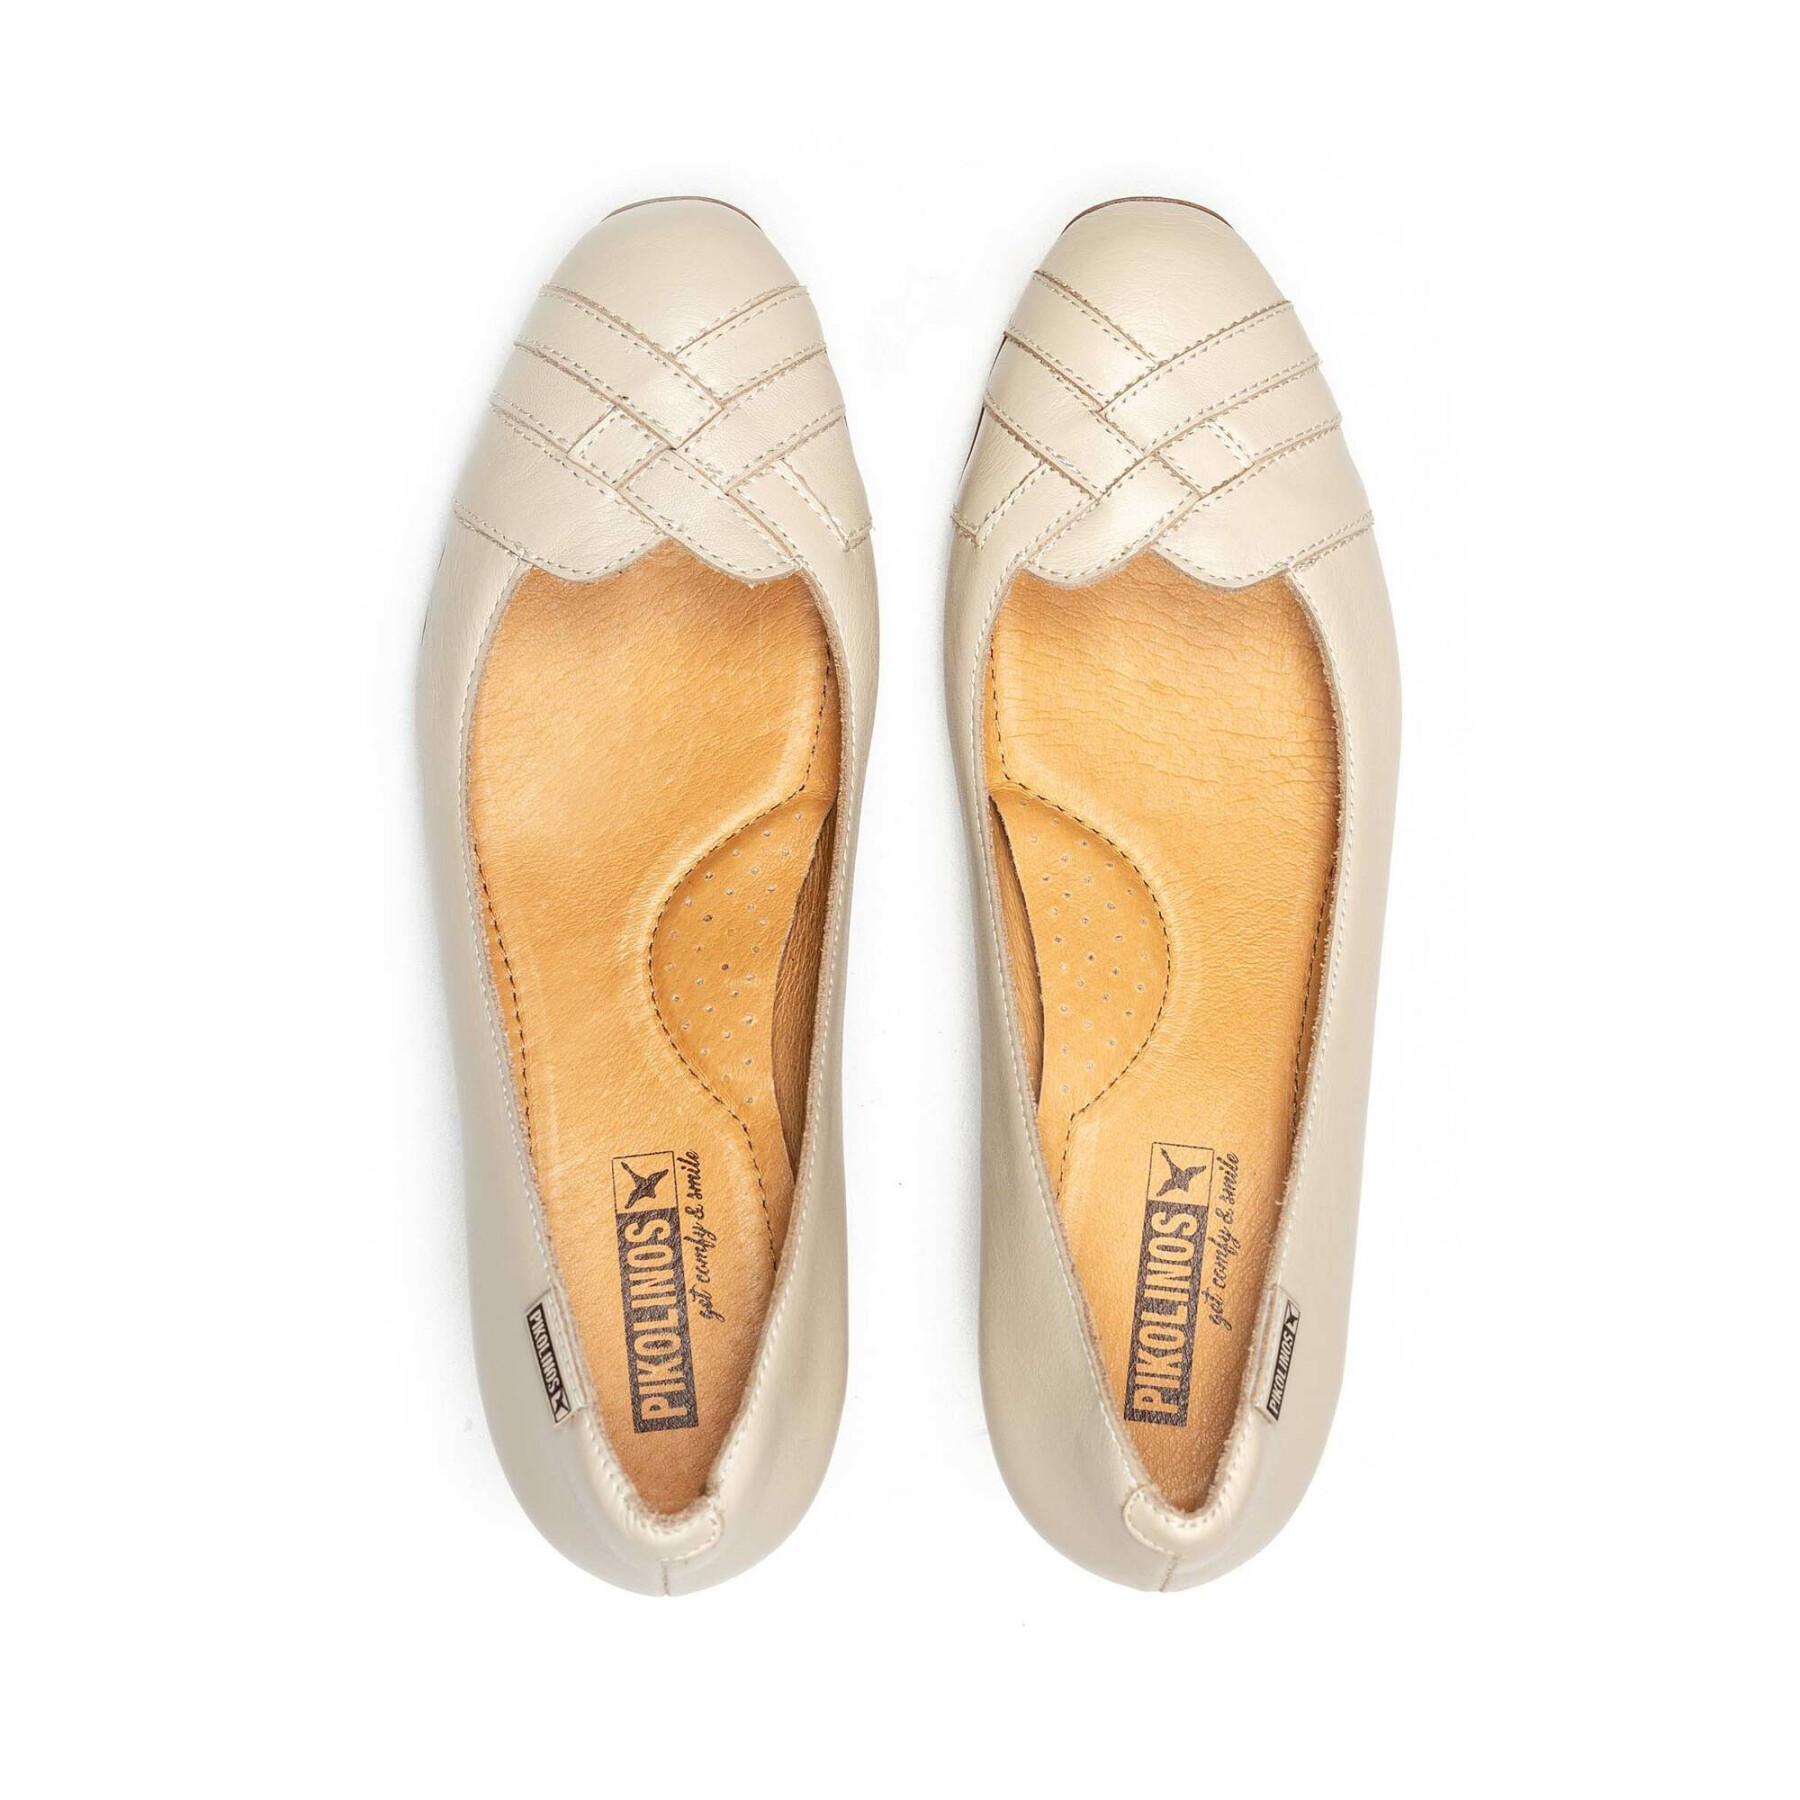 Women's shoes Pikolinos Figueres W1Q-5915